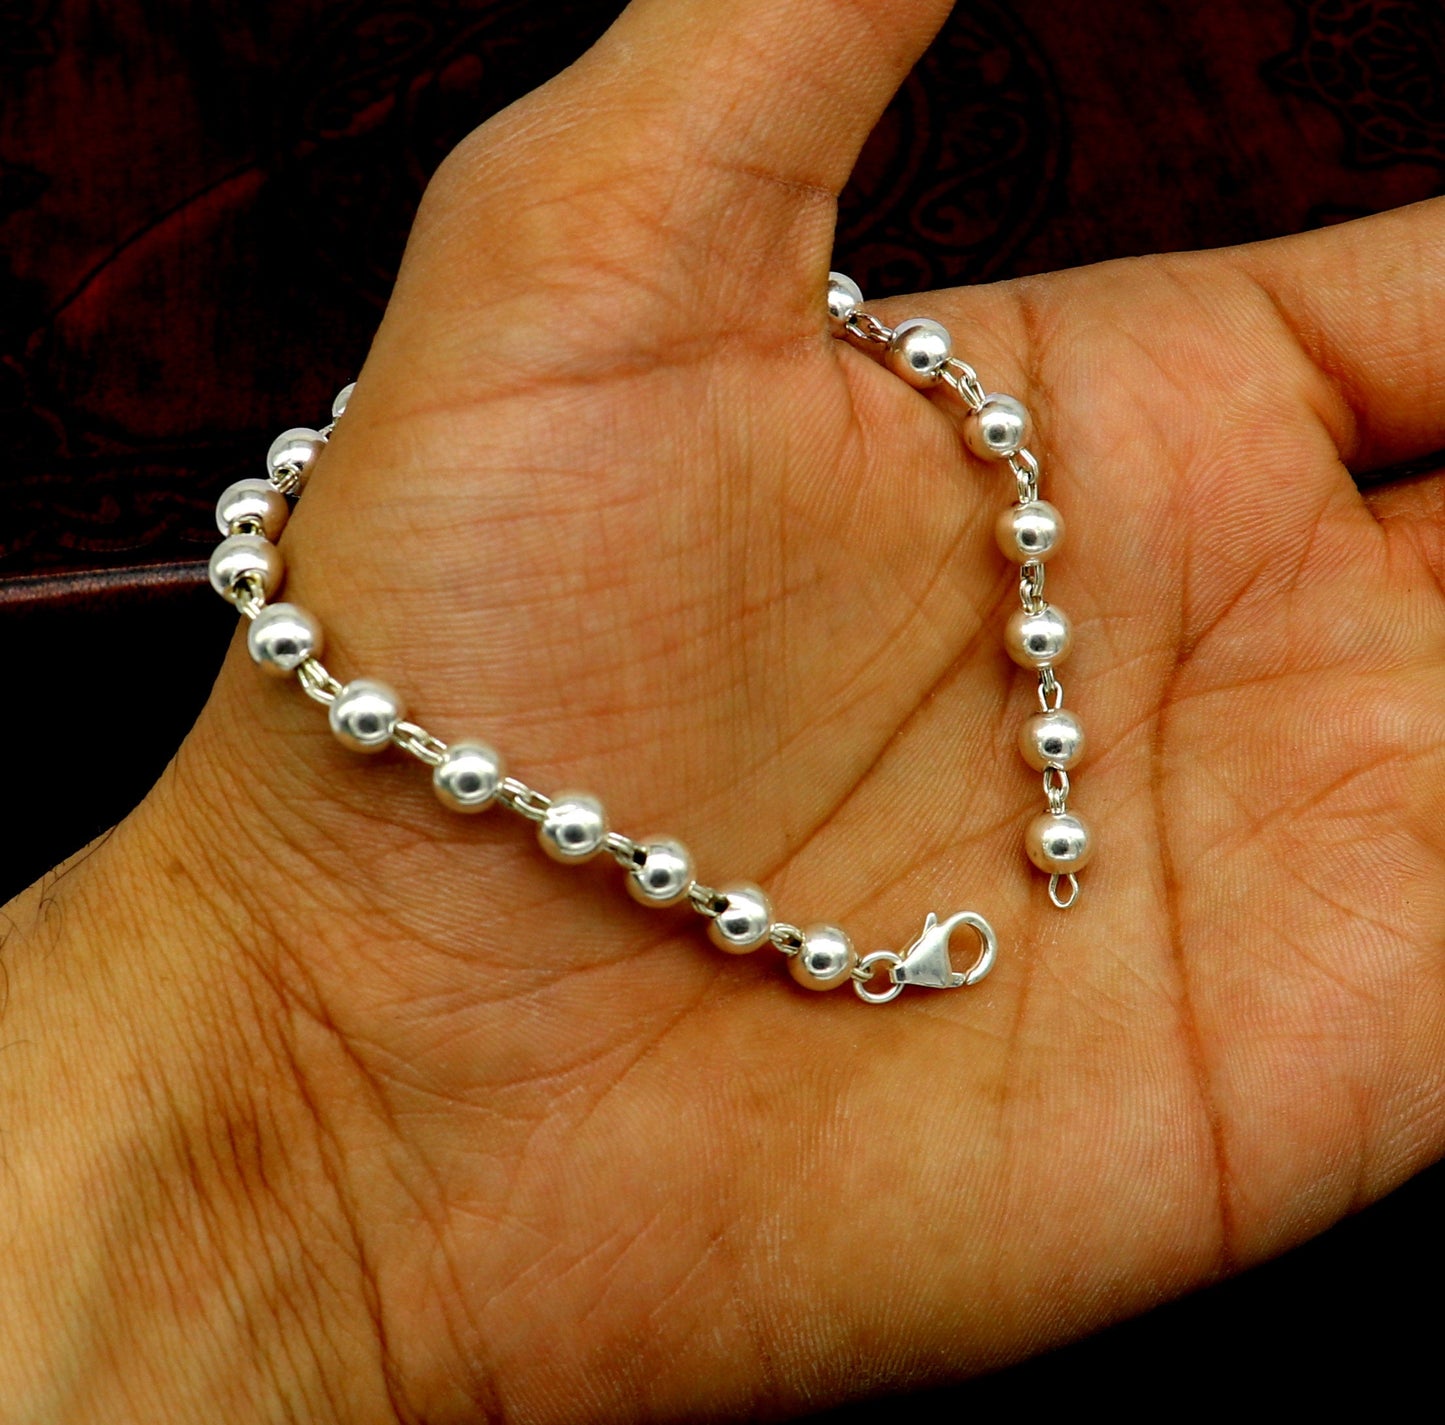 925 sterling silver handmade 5.5 mm round beads balls unisex bracelet, fabulous customized 8 inches long beaded bracelet stylish gift sbr211 - TRIBAL ORNAMENTS